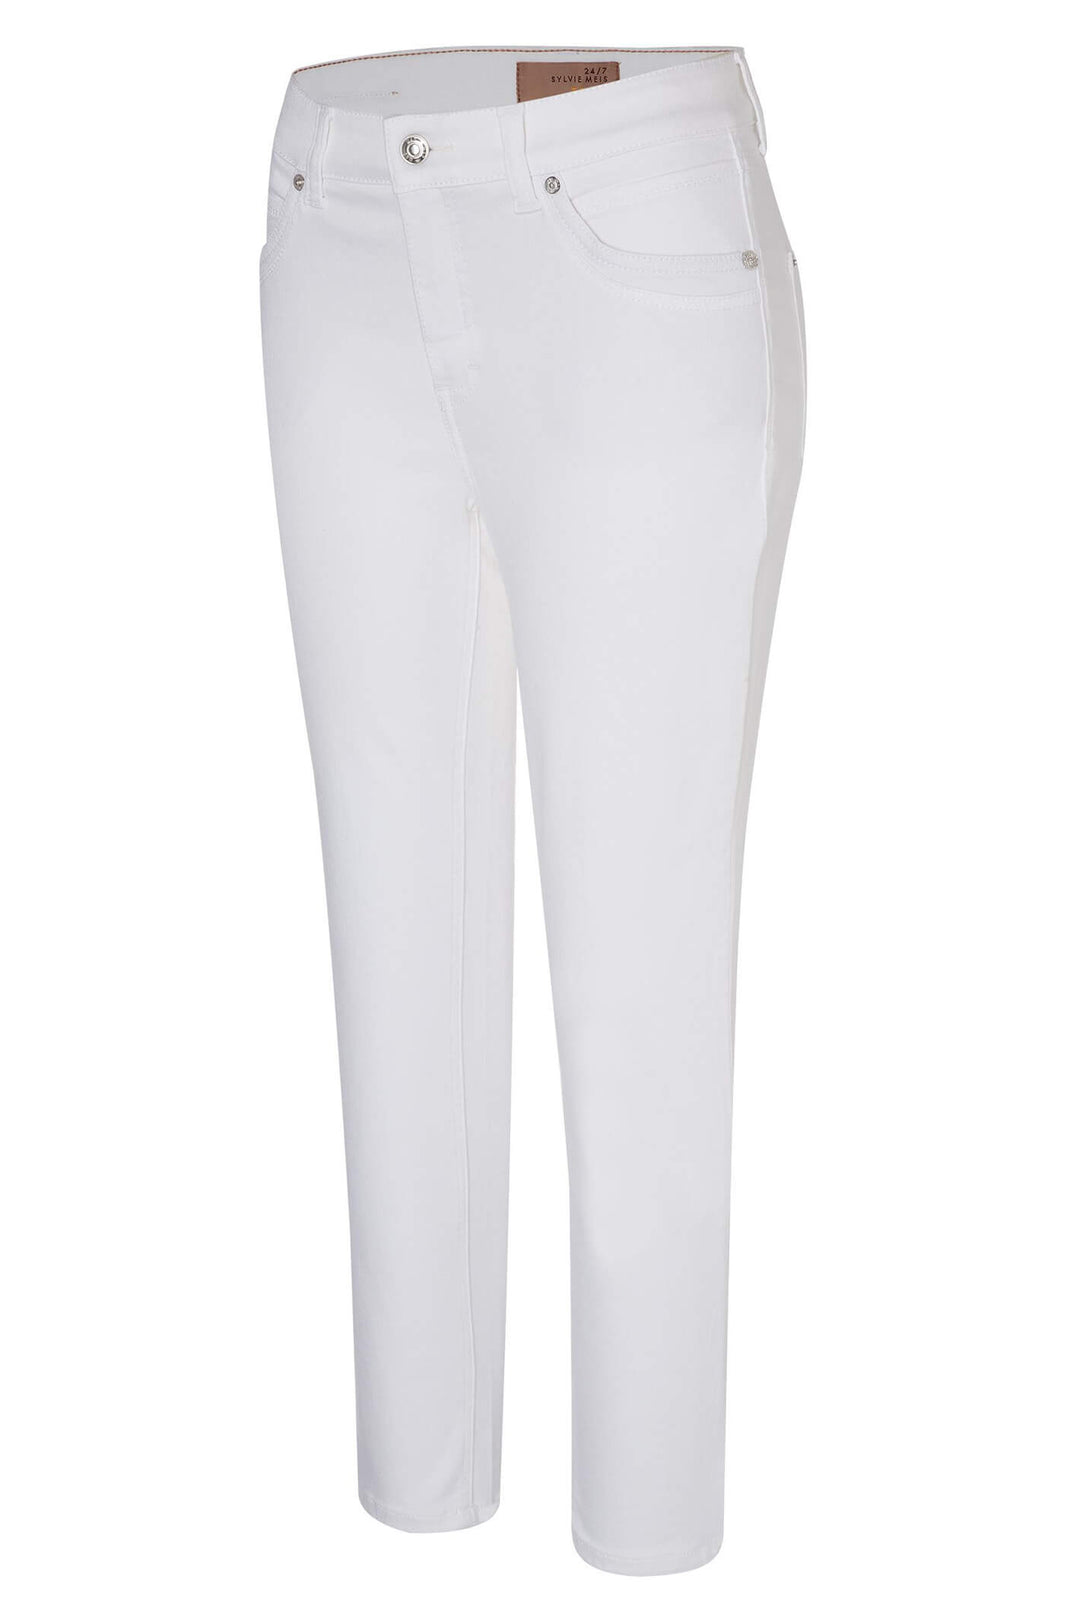 MAC Mel 2620-90-0389L D010 White Denim Jeans - Olivia Grace Fashion